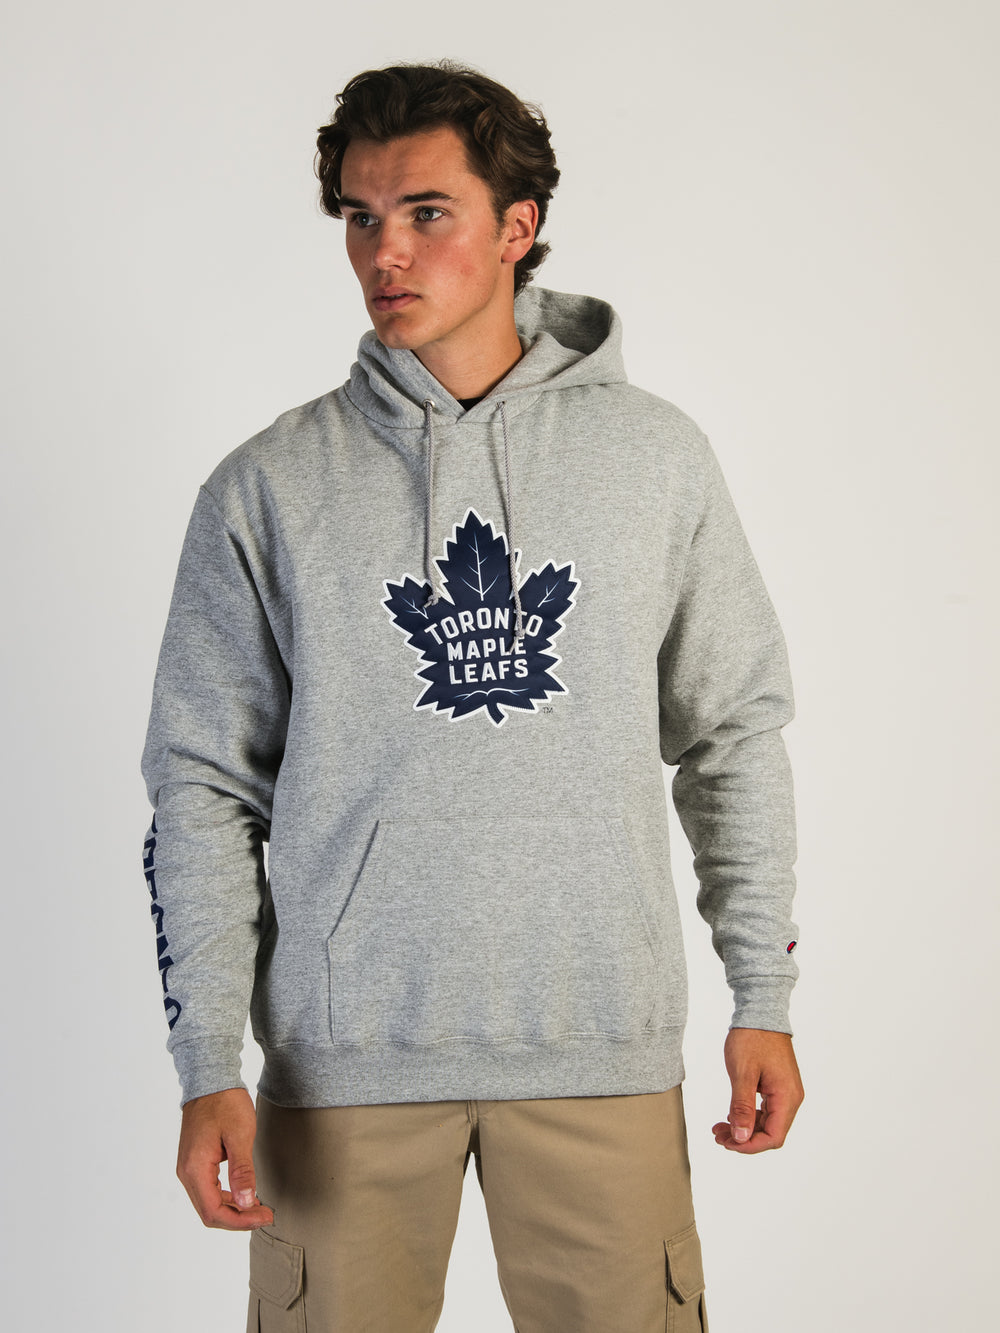 Go Leafs Go Toronto Maple Leafs Shirt, hoodie, sweater, long